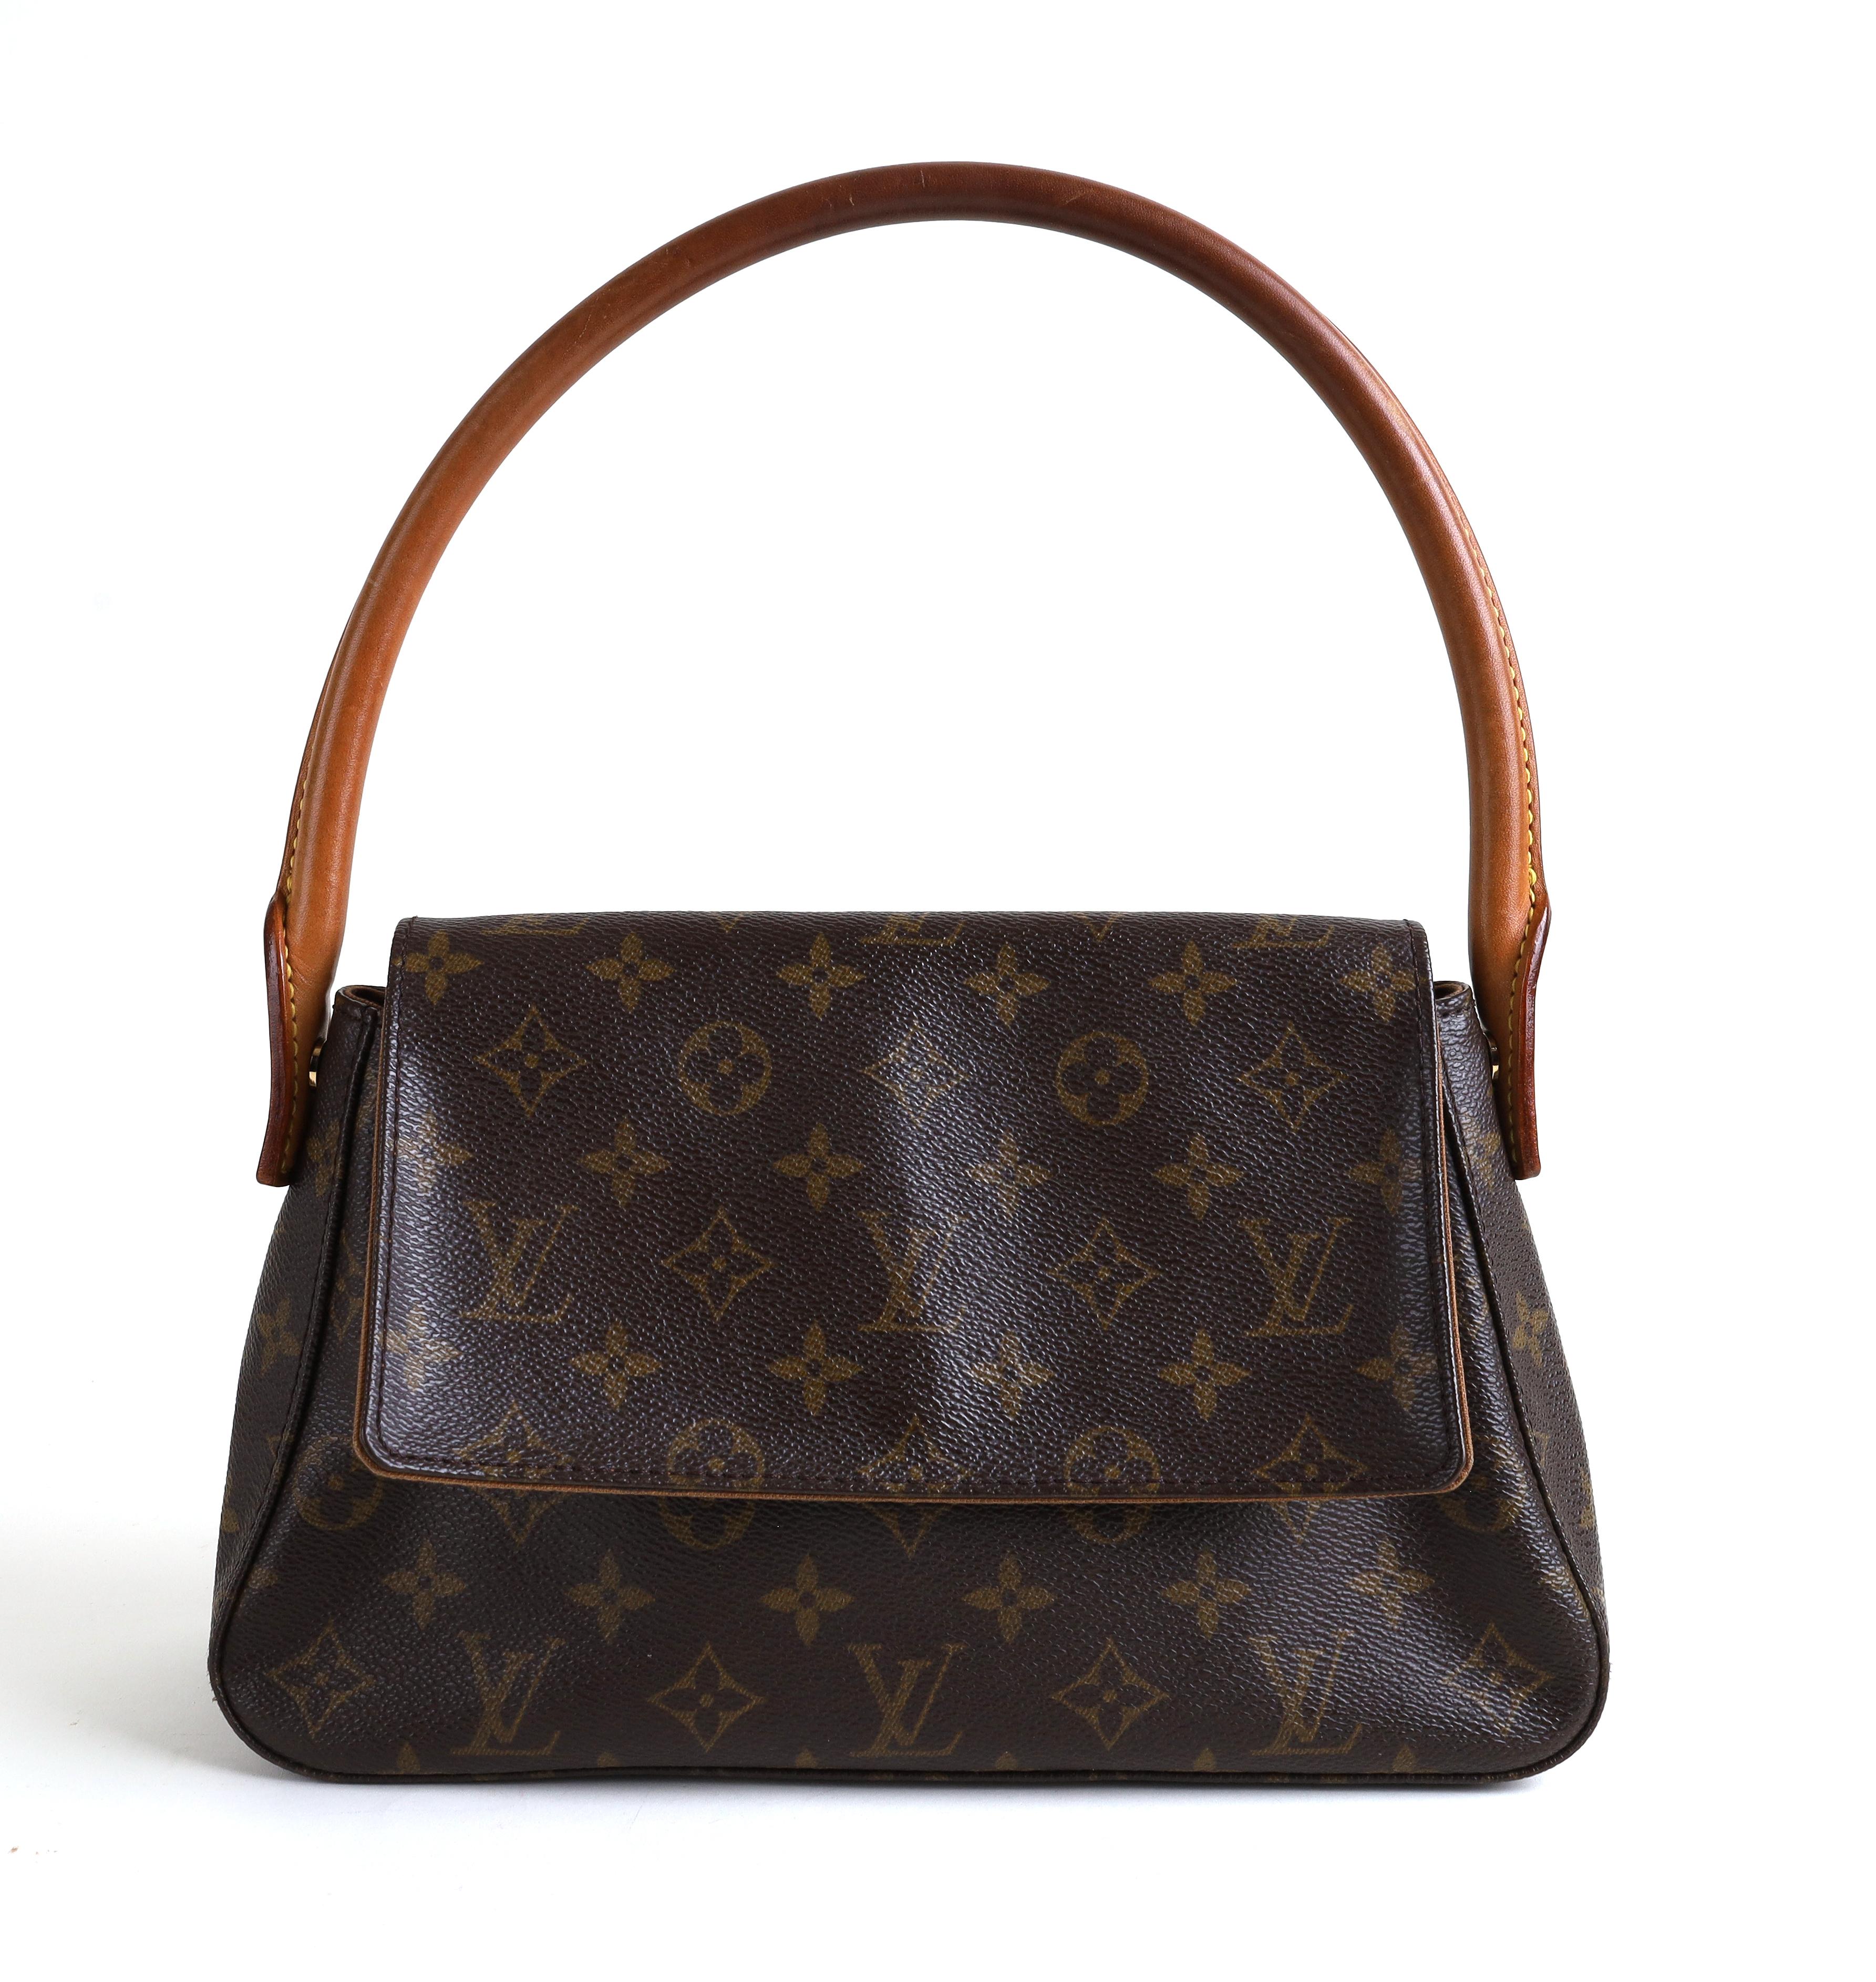 Louis Vuitton Handtaschen & Accessoires